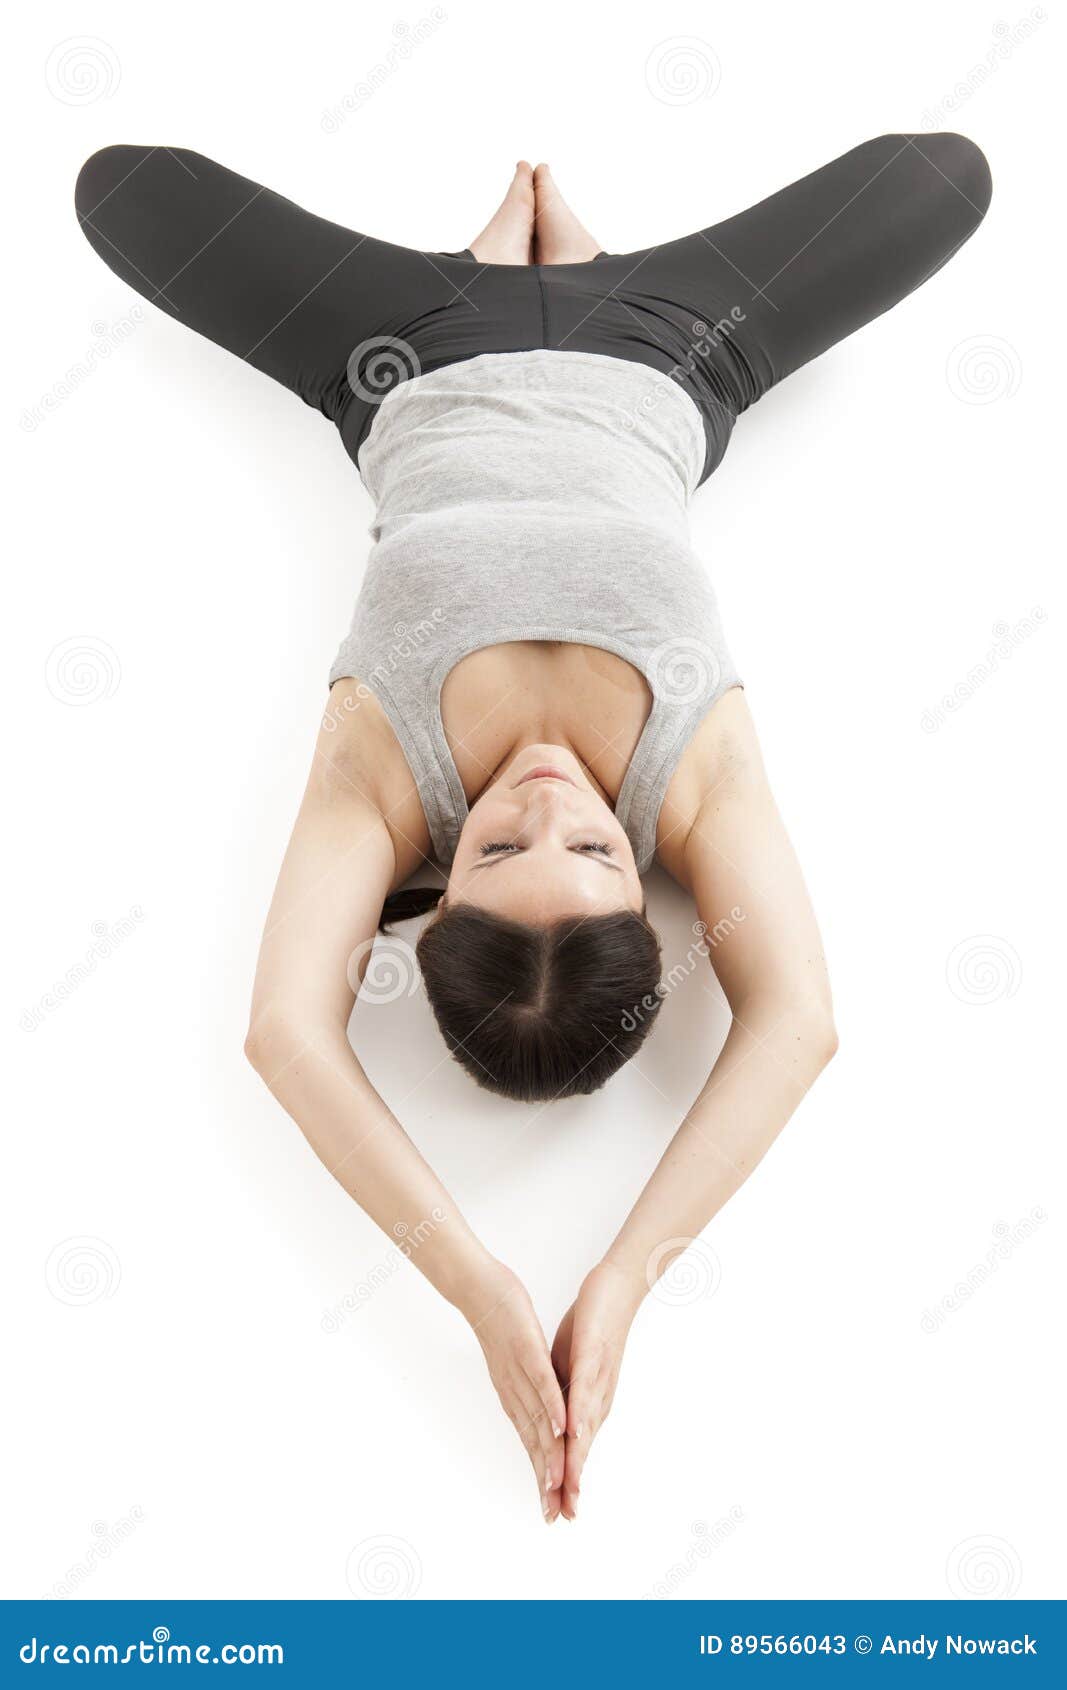 10 Simple Yoga Poses for Better Sleep